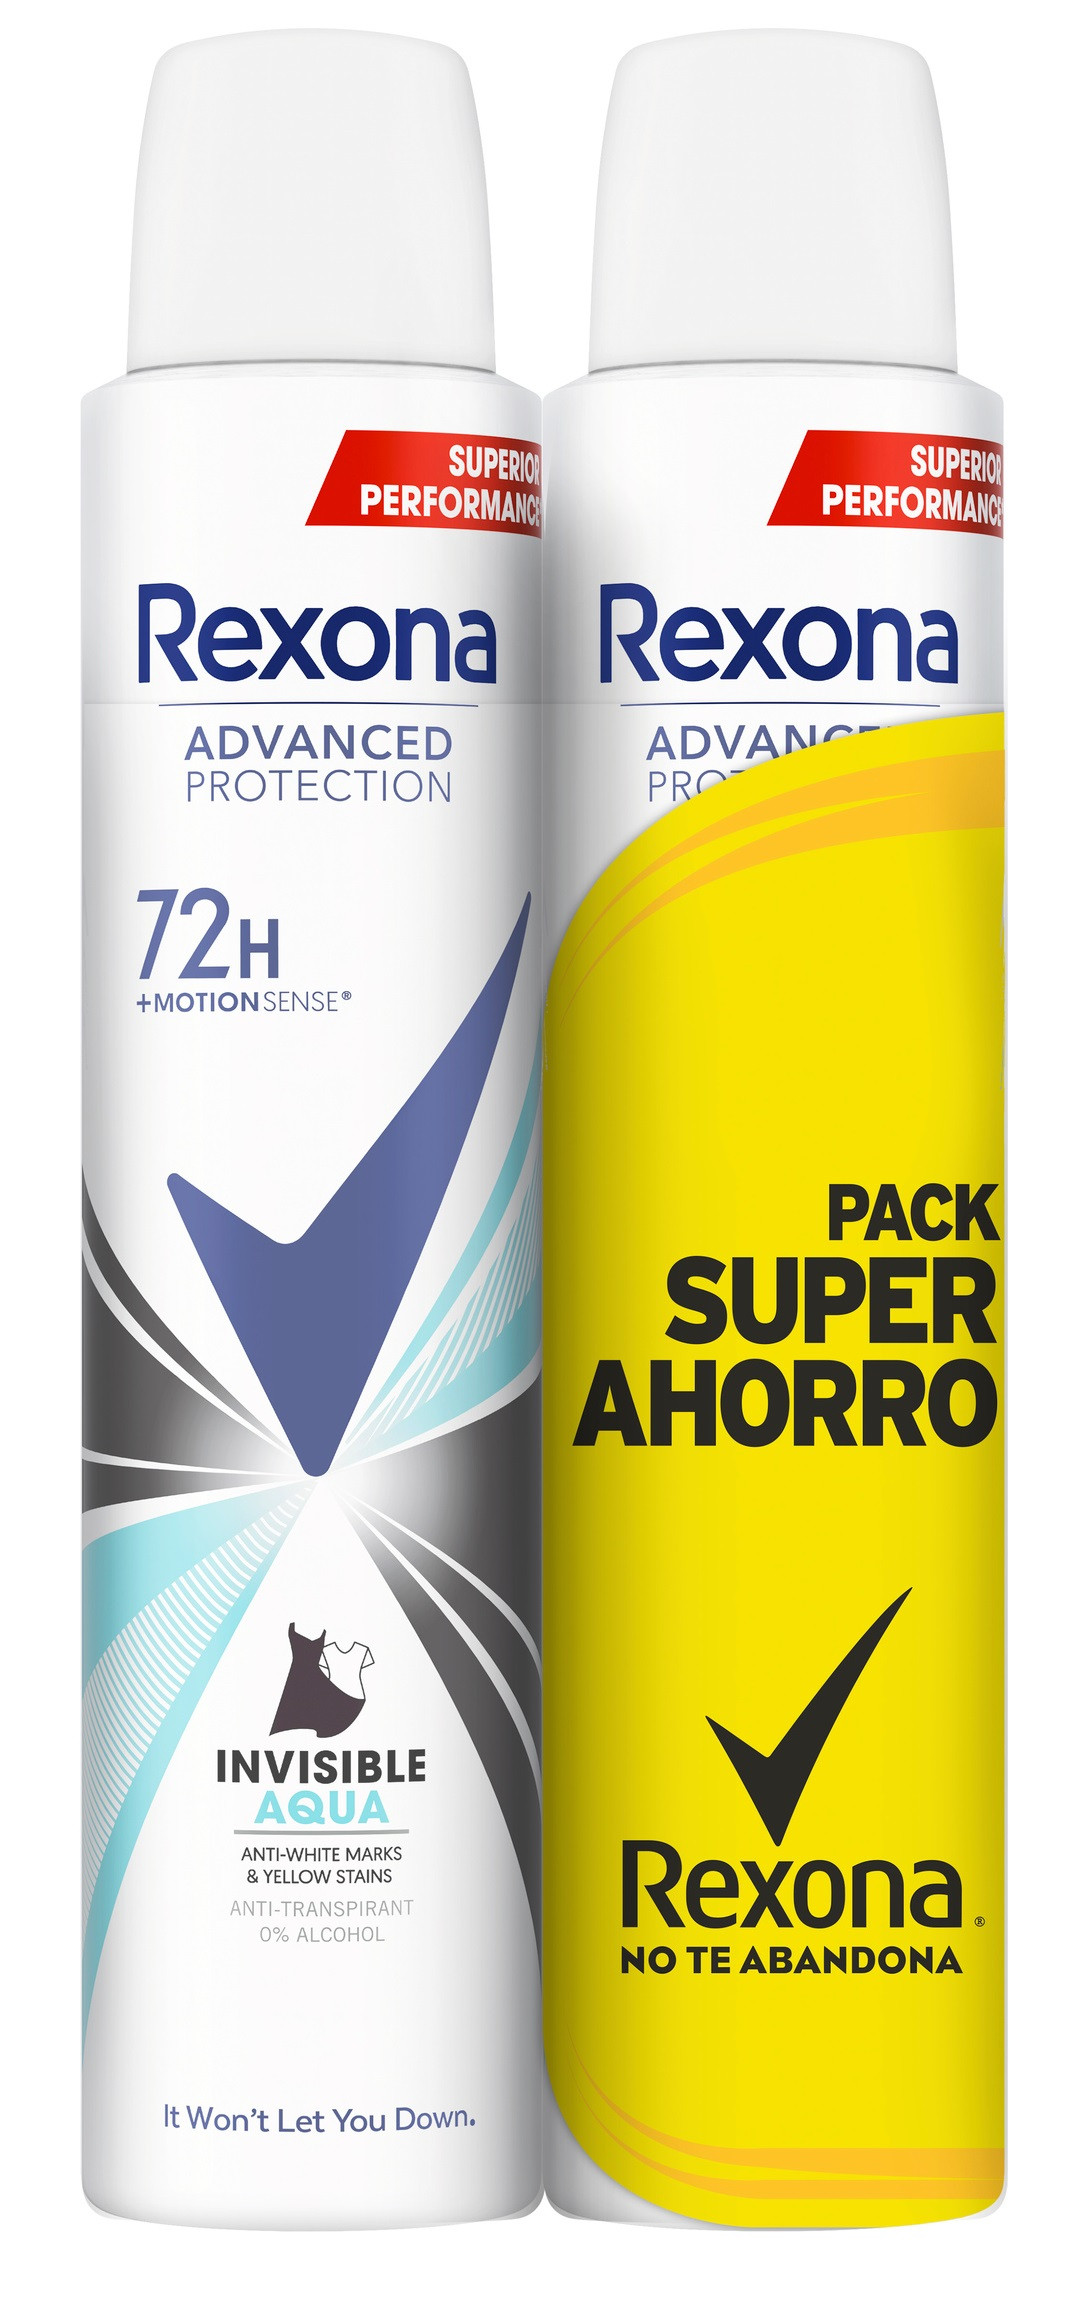 Juego de 2 desodorantes Rexona Motion Sense para mujer, algodón seco, 1.76  oz